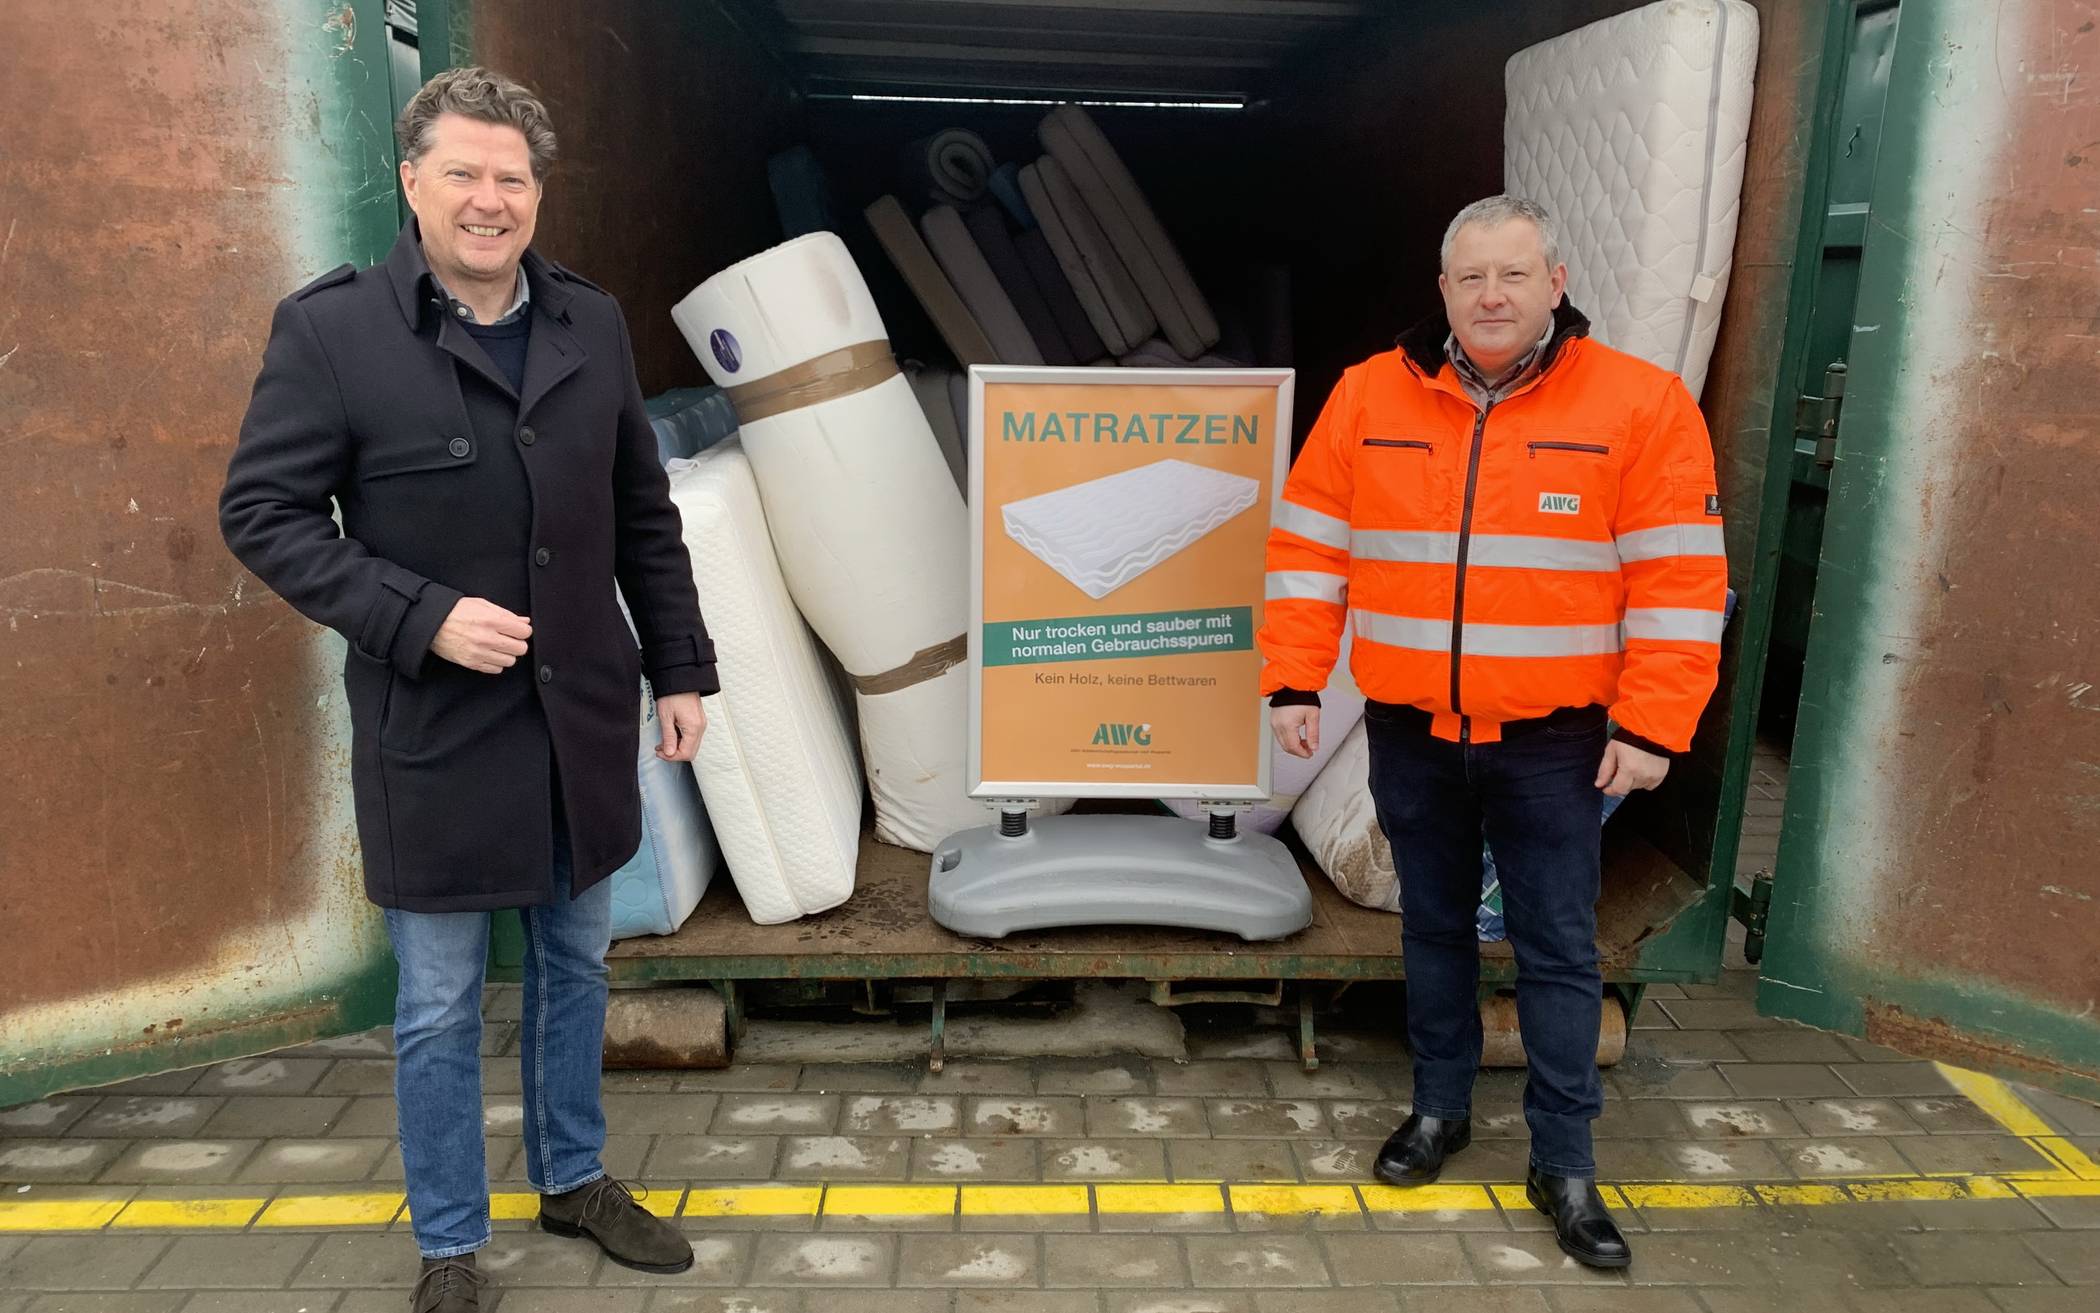 Matratzen-Recycling: Pilotprojekt in Wuppertal